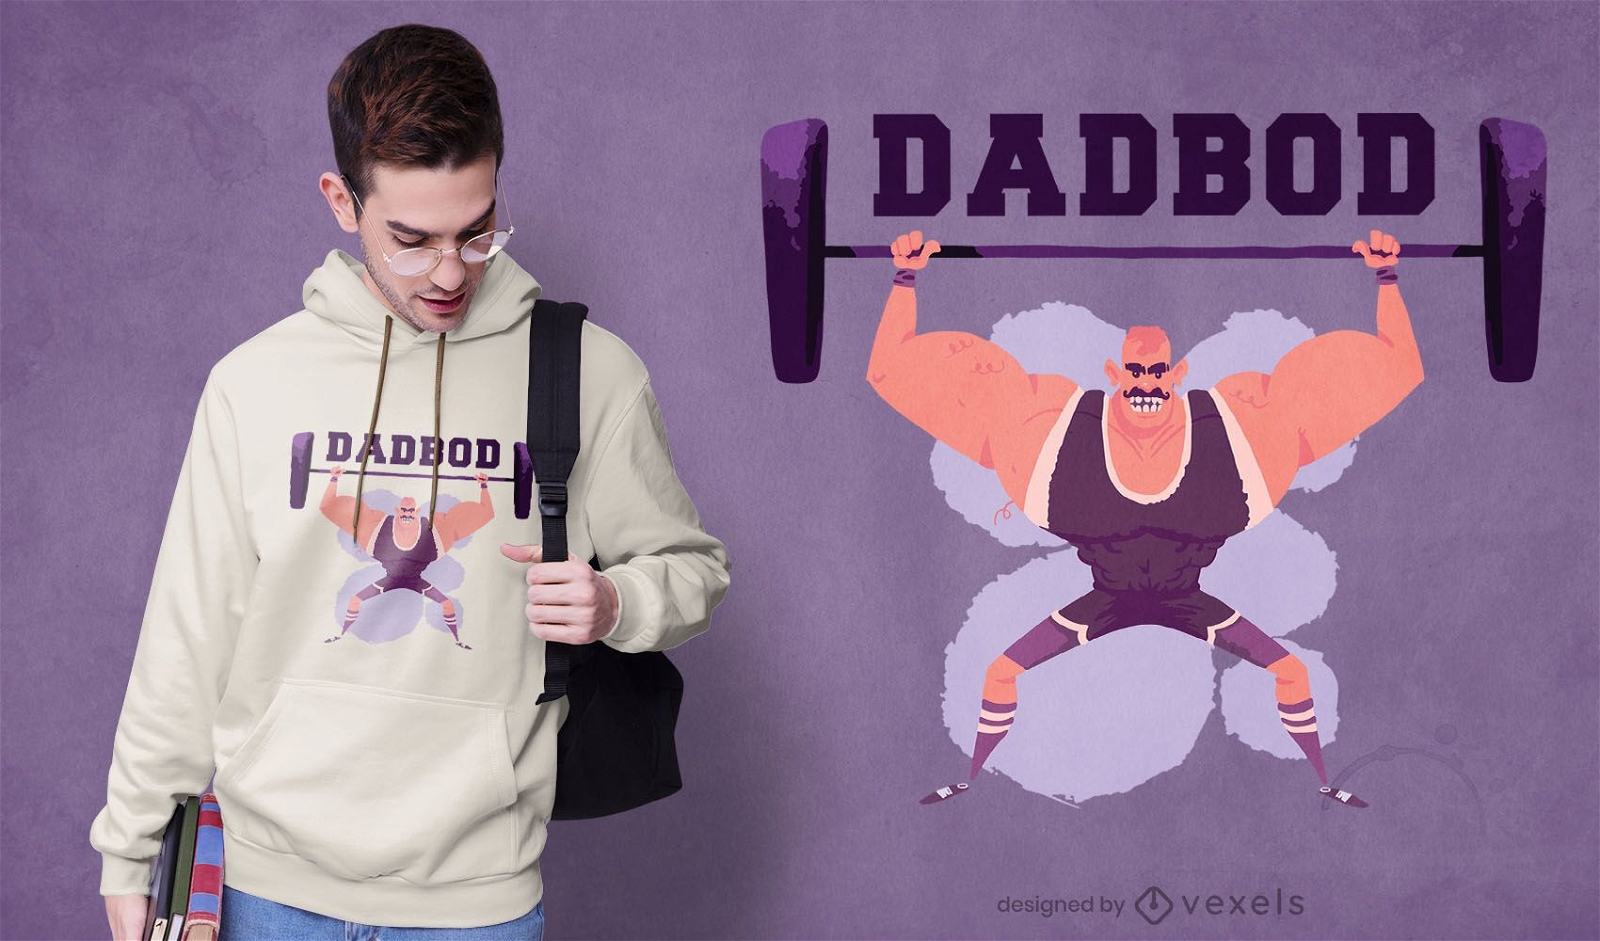 Weightlifter dad t-shirt design